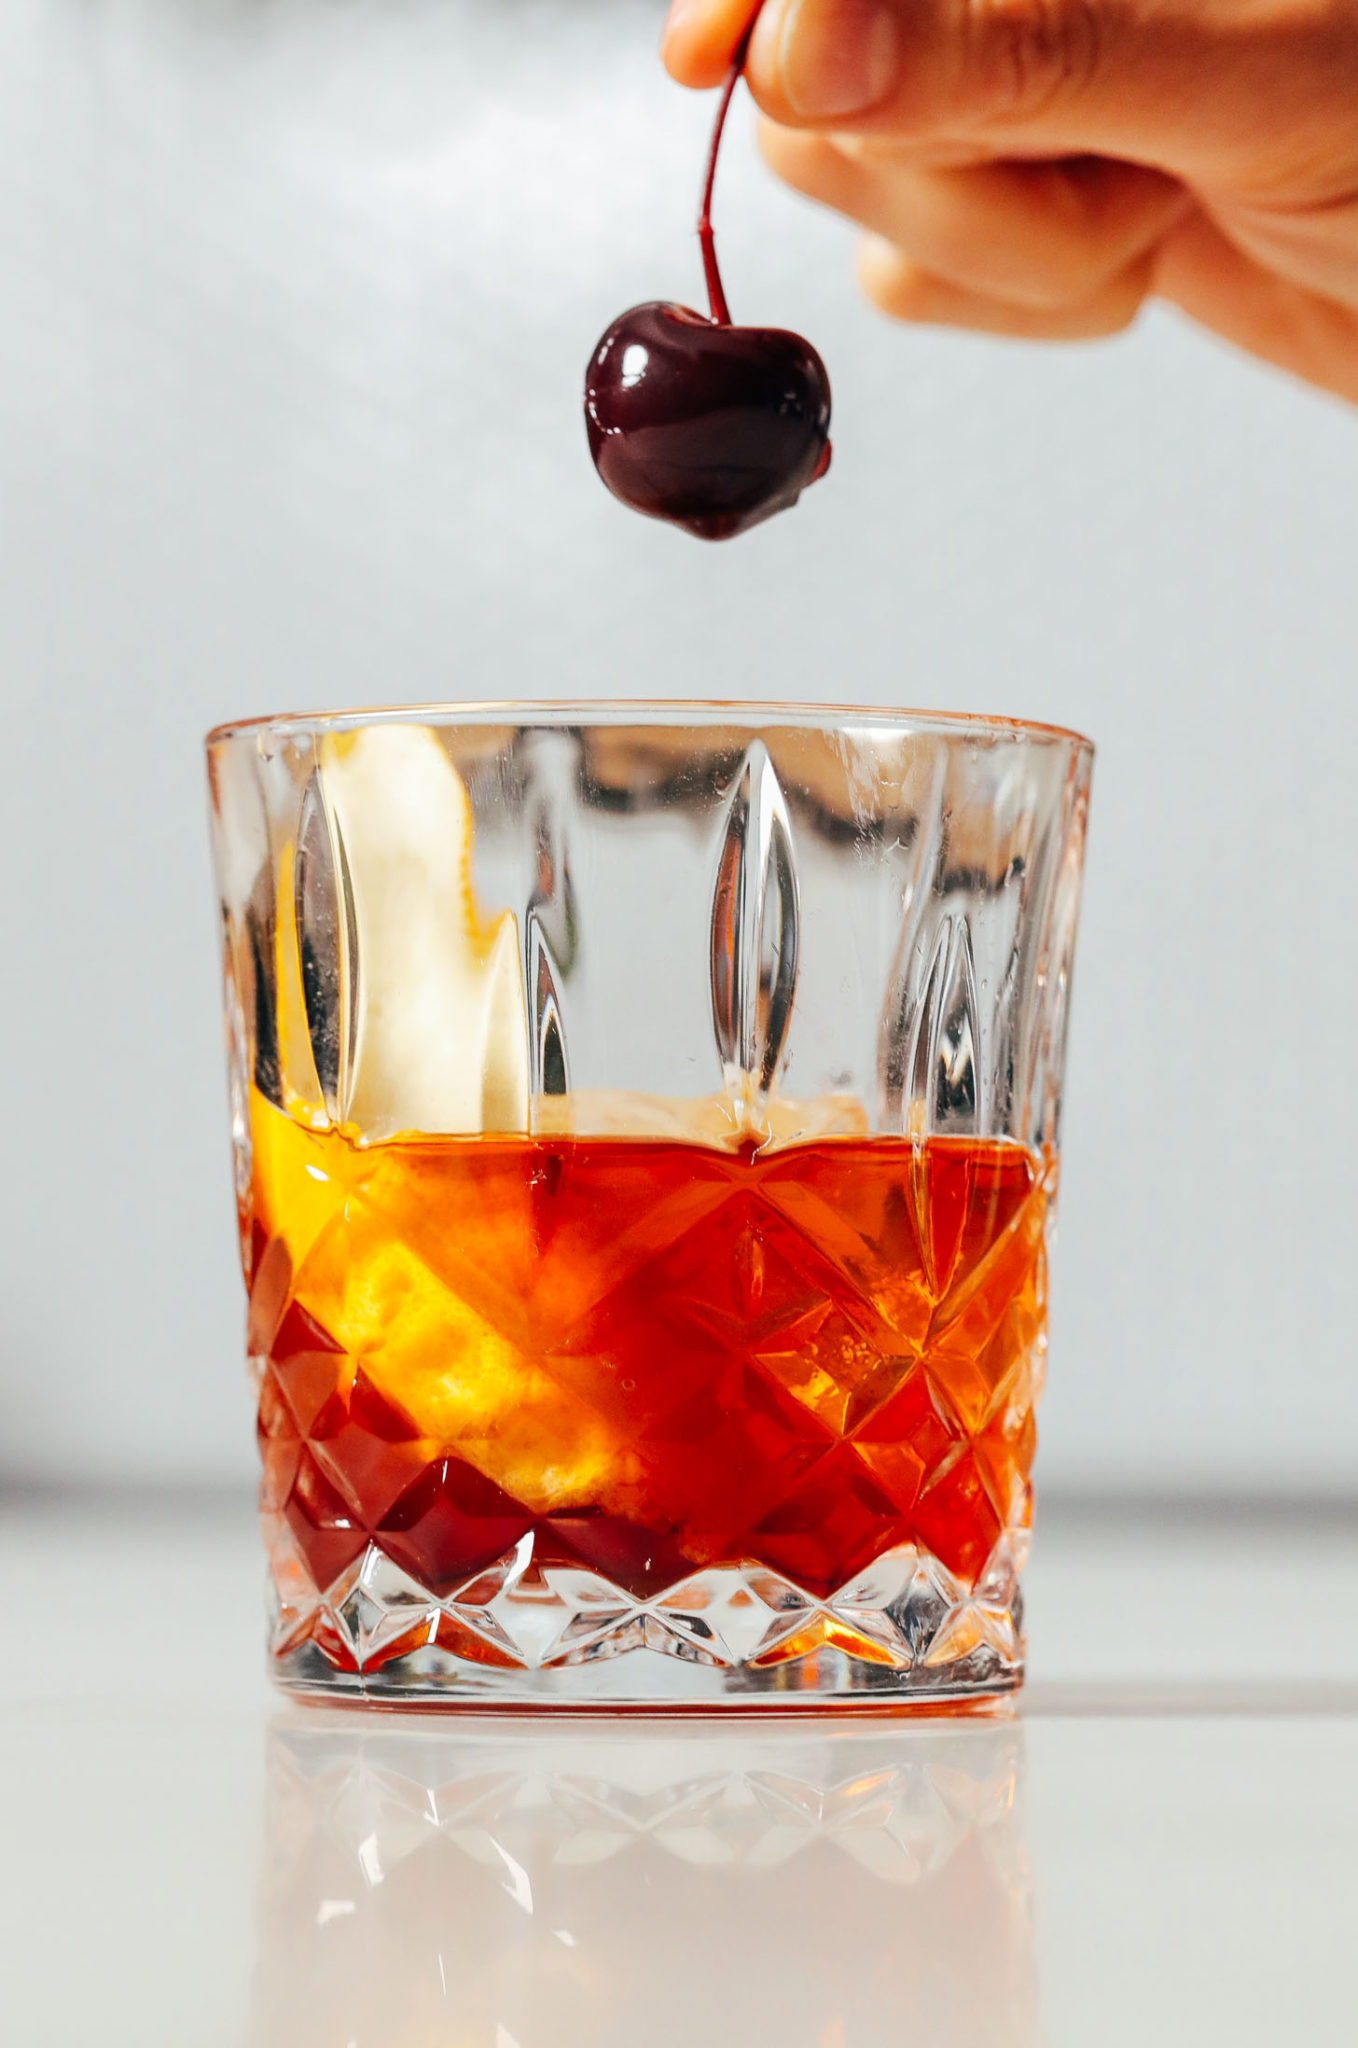 old fashioned drink recipe bourbon